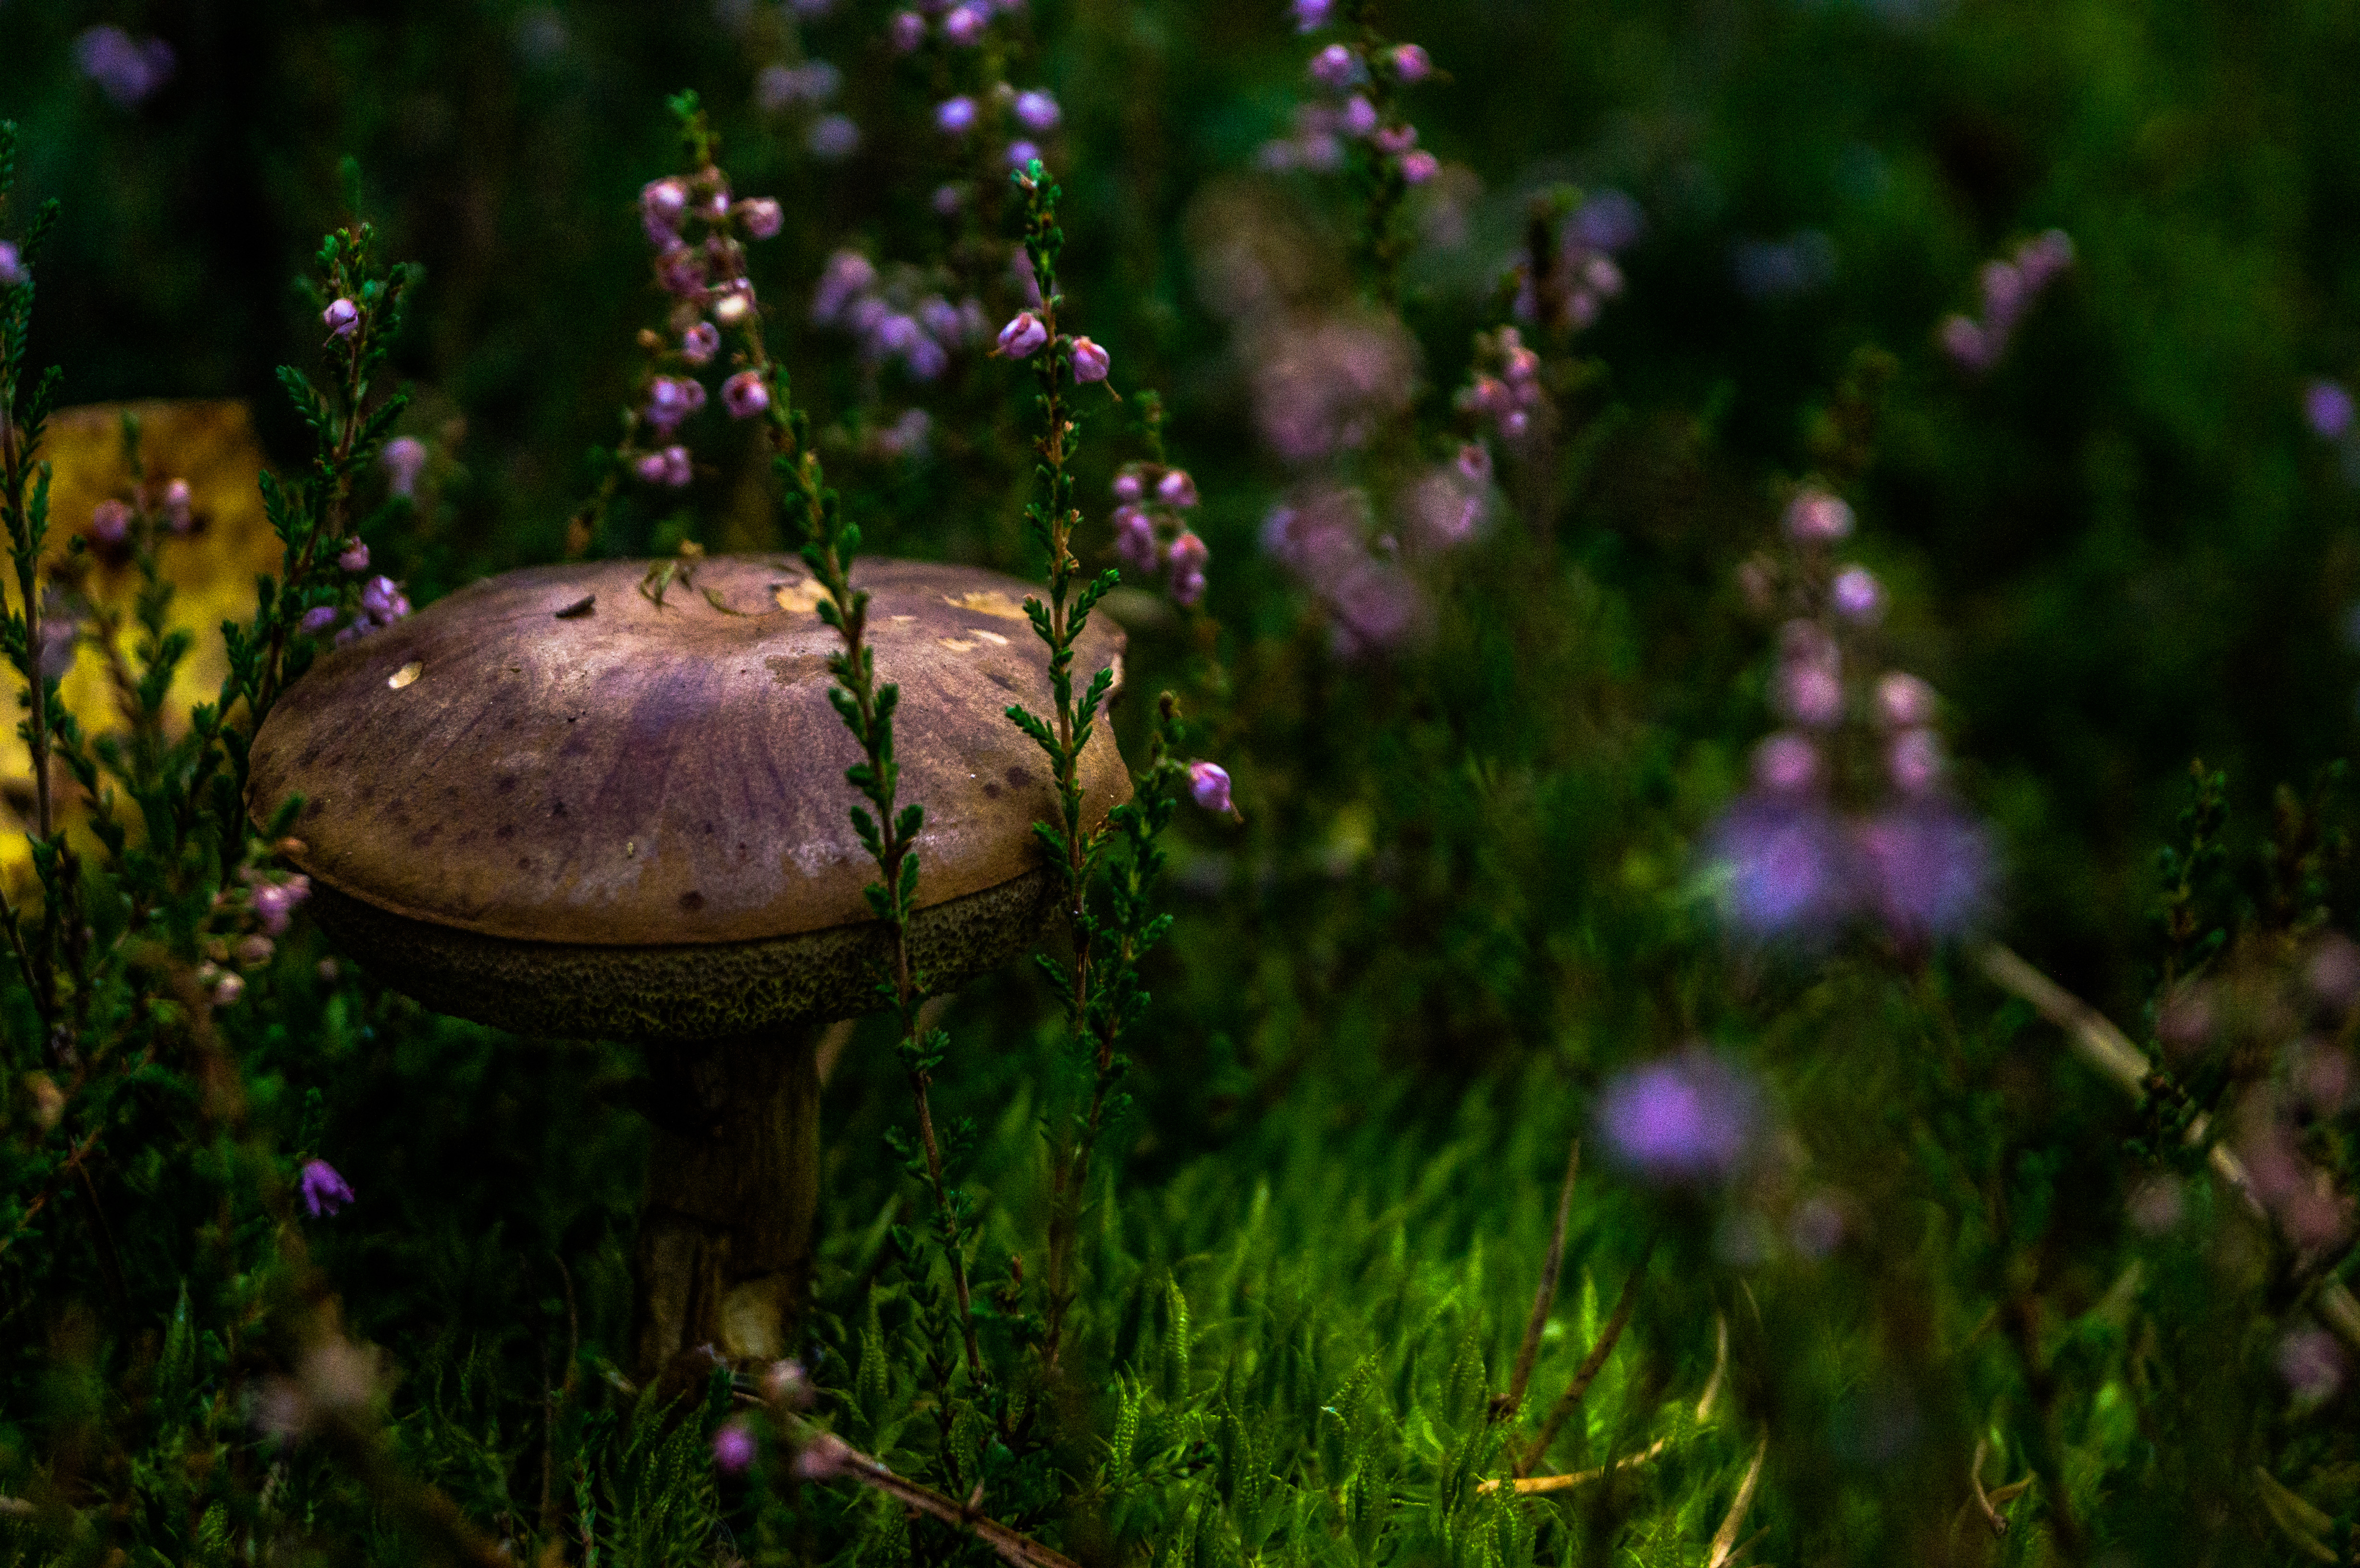 Mushroom by xkoko11